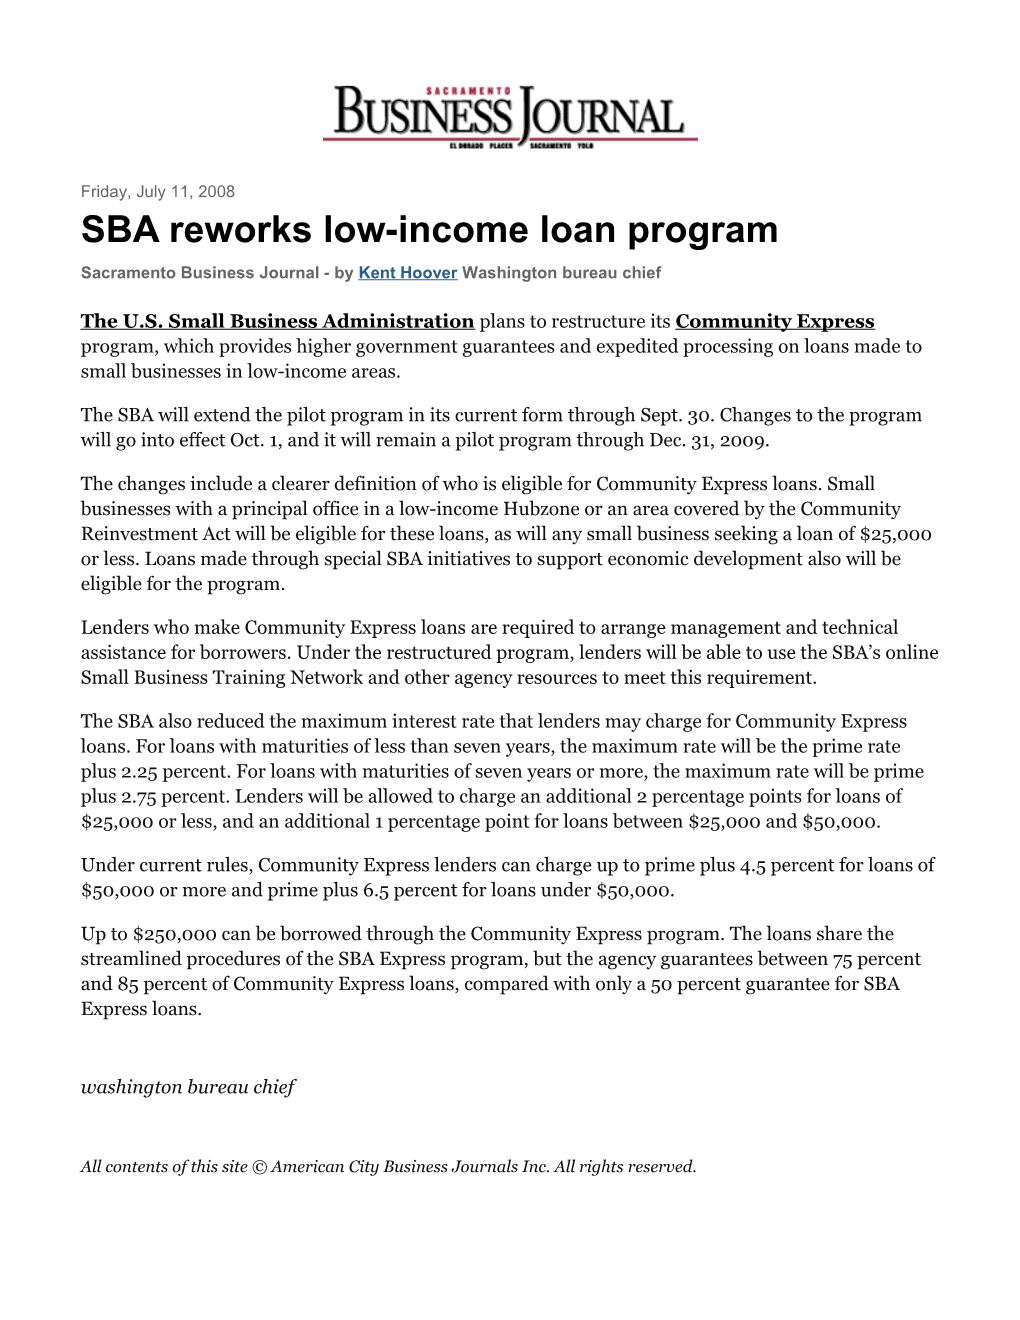 SBA Reworks Low-Income Loan Program